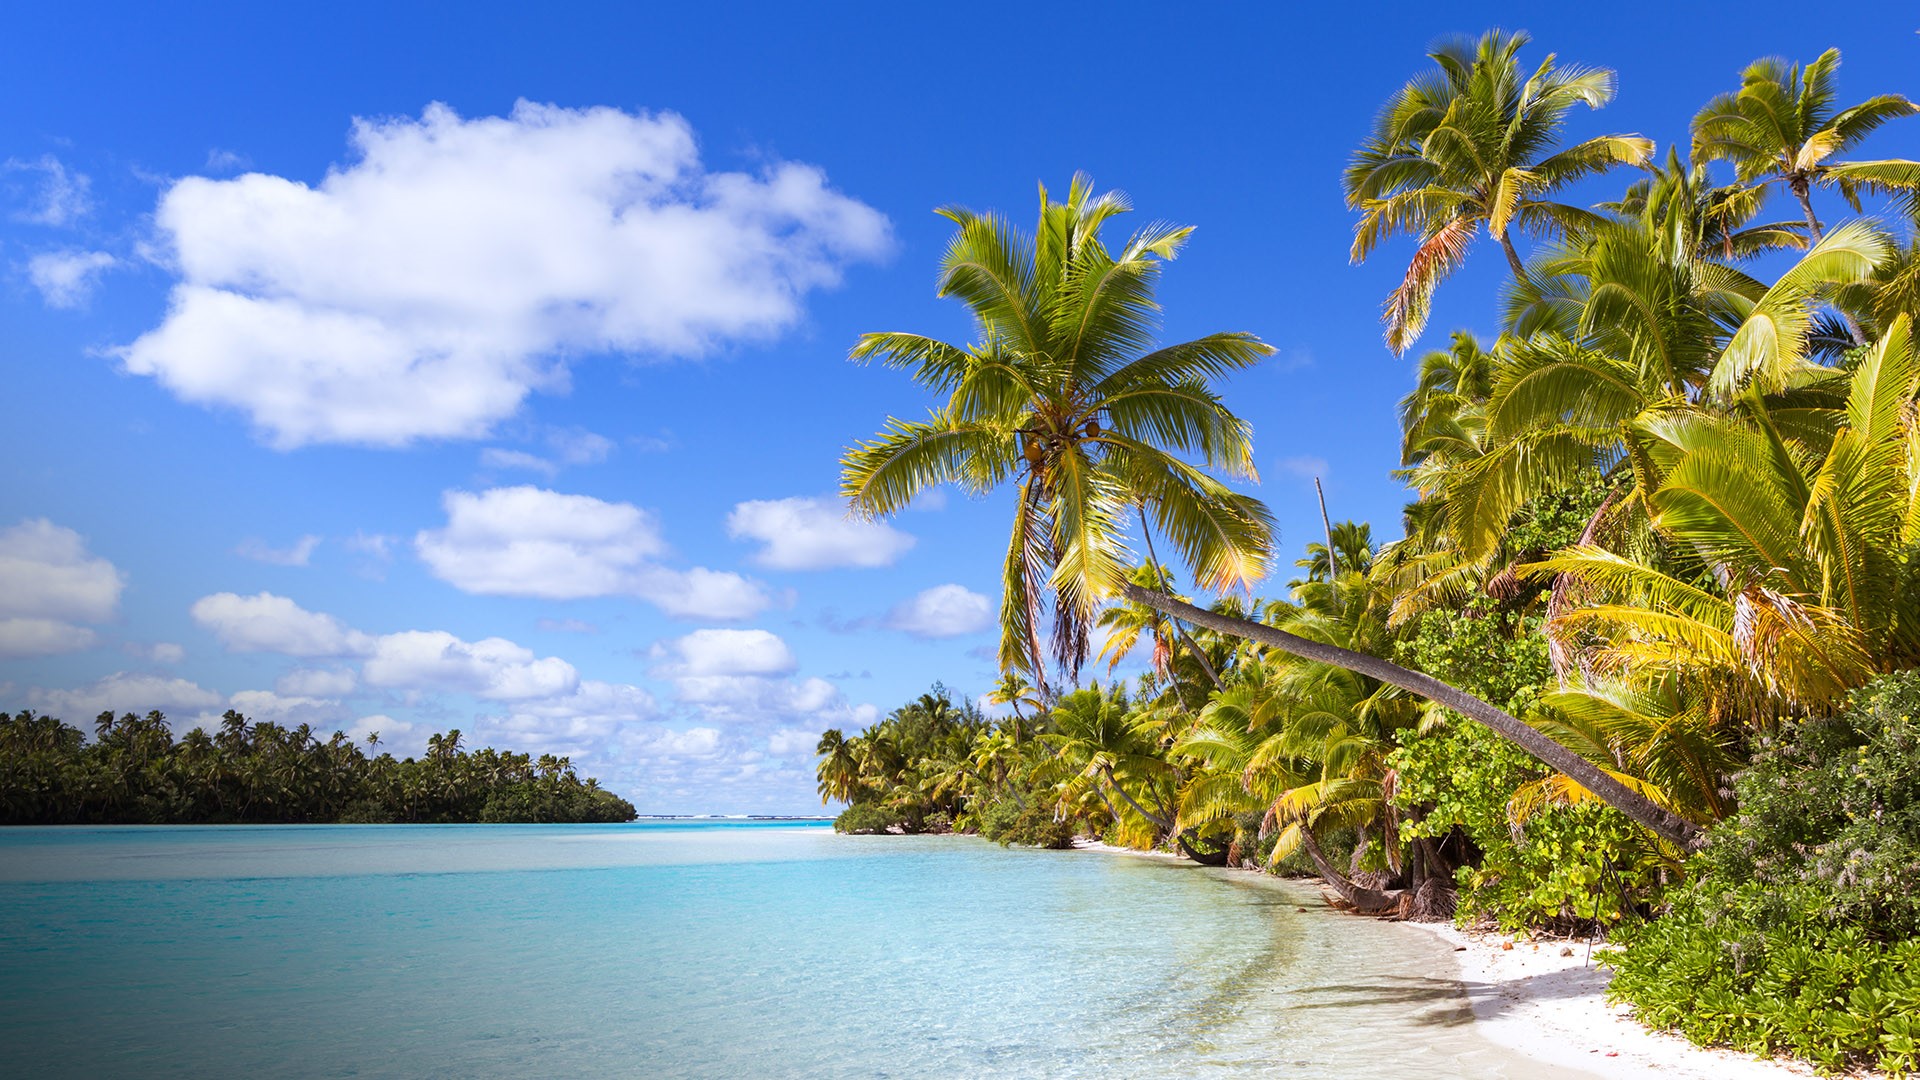 Tropical beach on One Foot Island (Tapuaetai), Aitutaki, Cook Islands